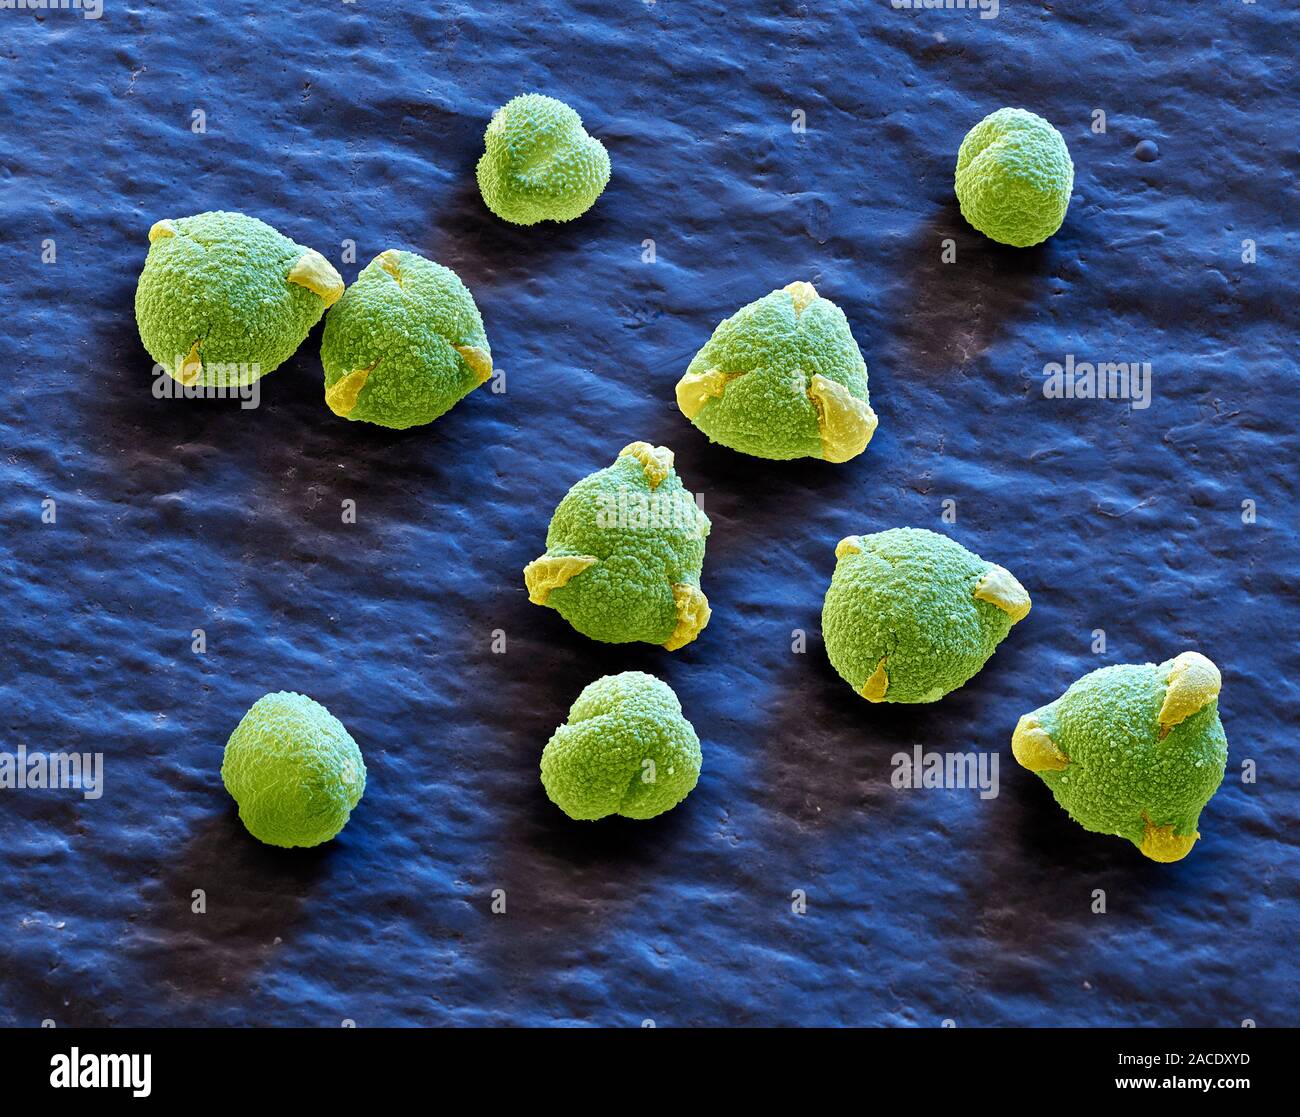 Oak tree pollen. Coloured scanning electron micrograph (SEM) of pollen ...